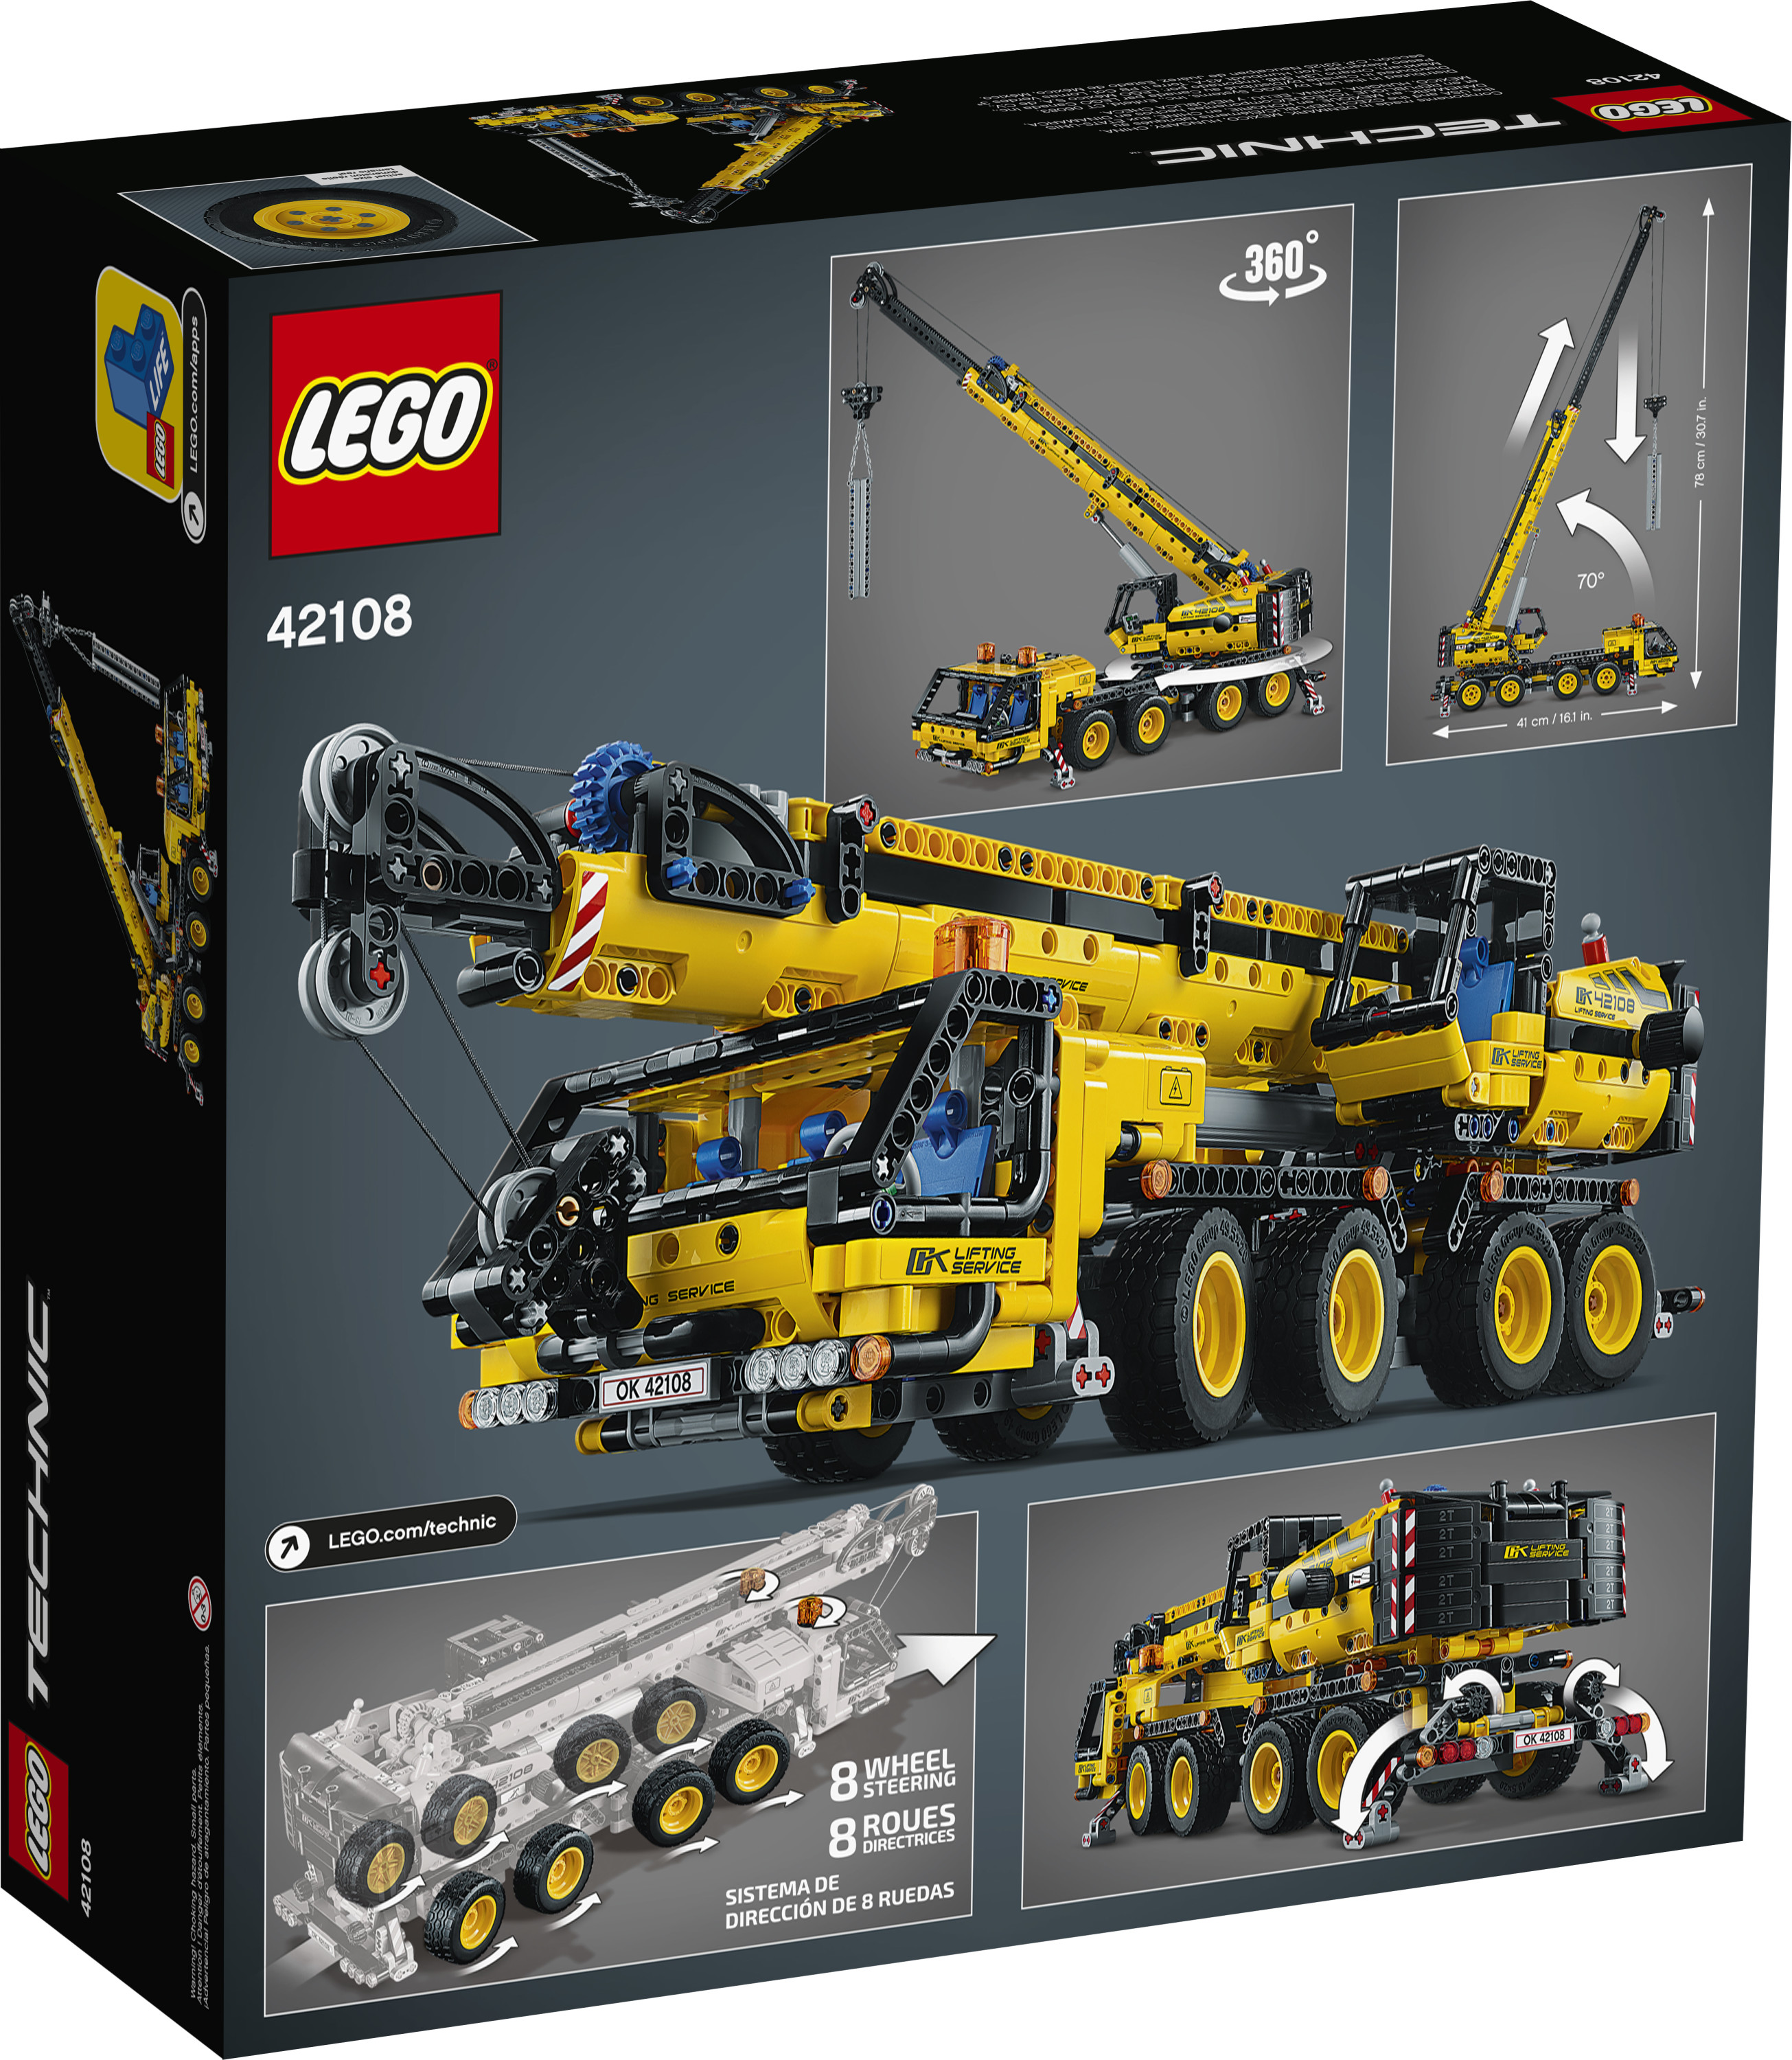 LEGO Technic Mobile Crane 42108 Construction Toy Building Kit (1,292 pieces) - image 5 of 10